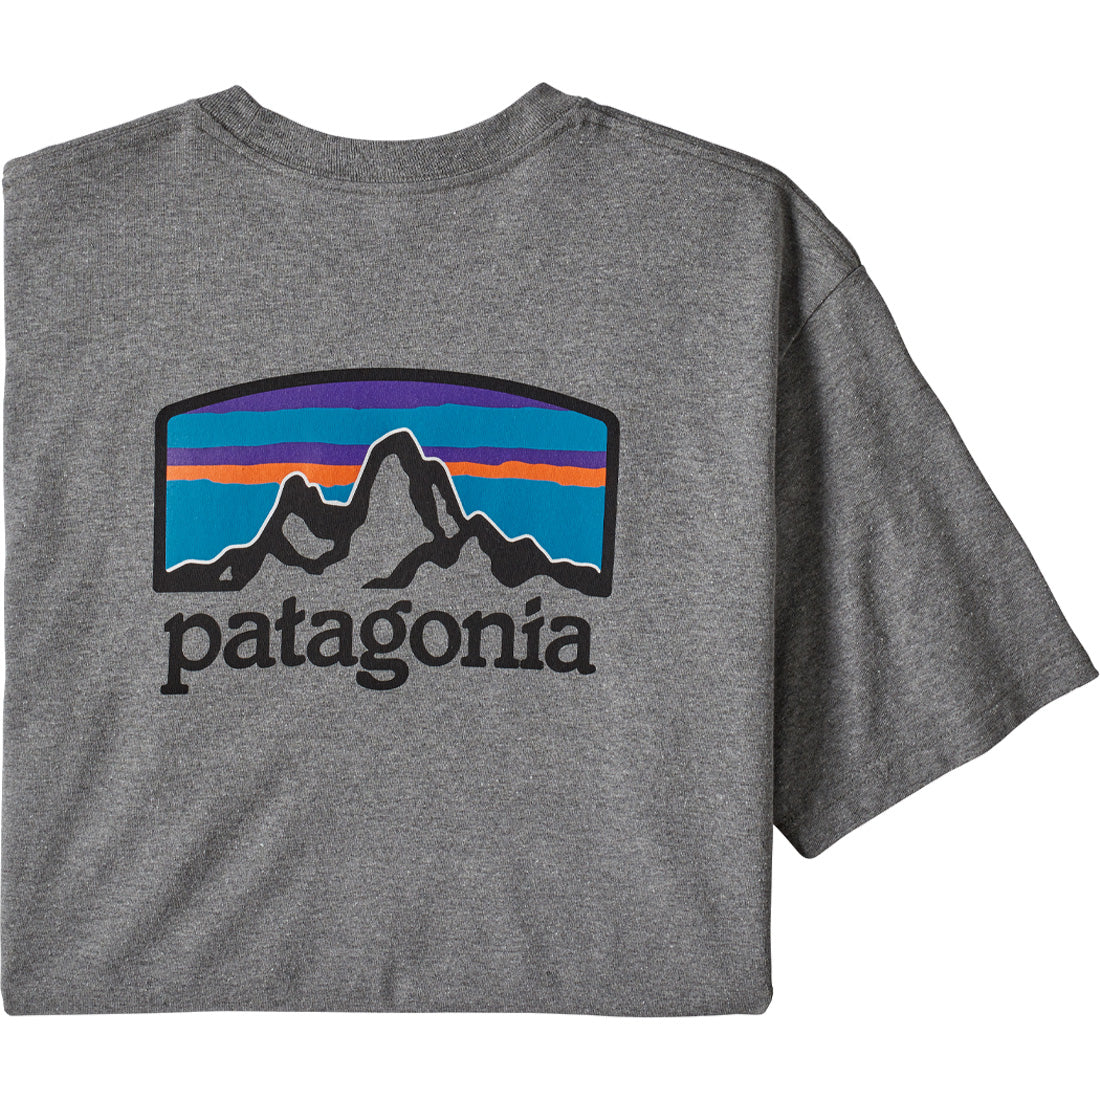 Patagonia Fitz Roy Horizons Responsibili-Tee - Men's